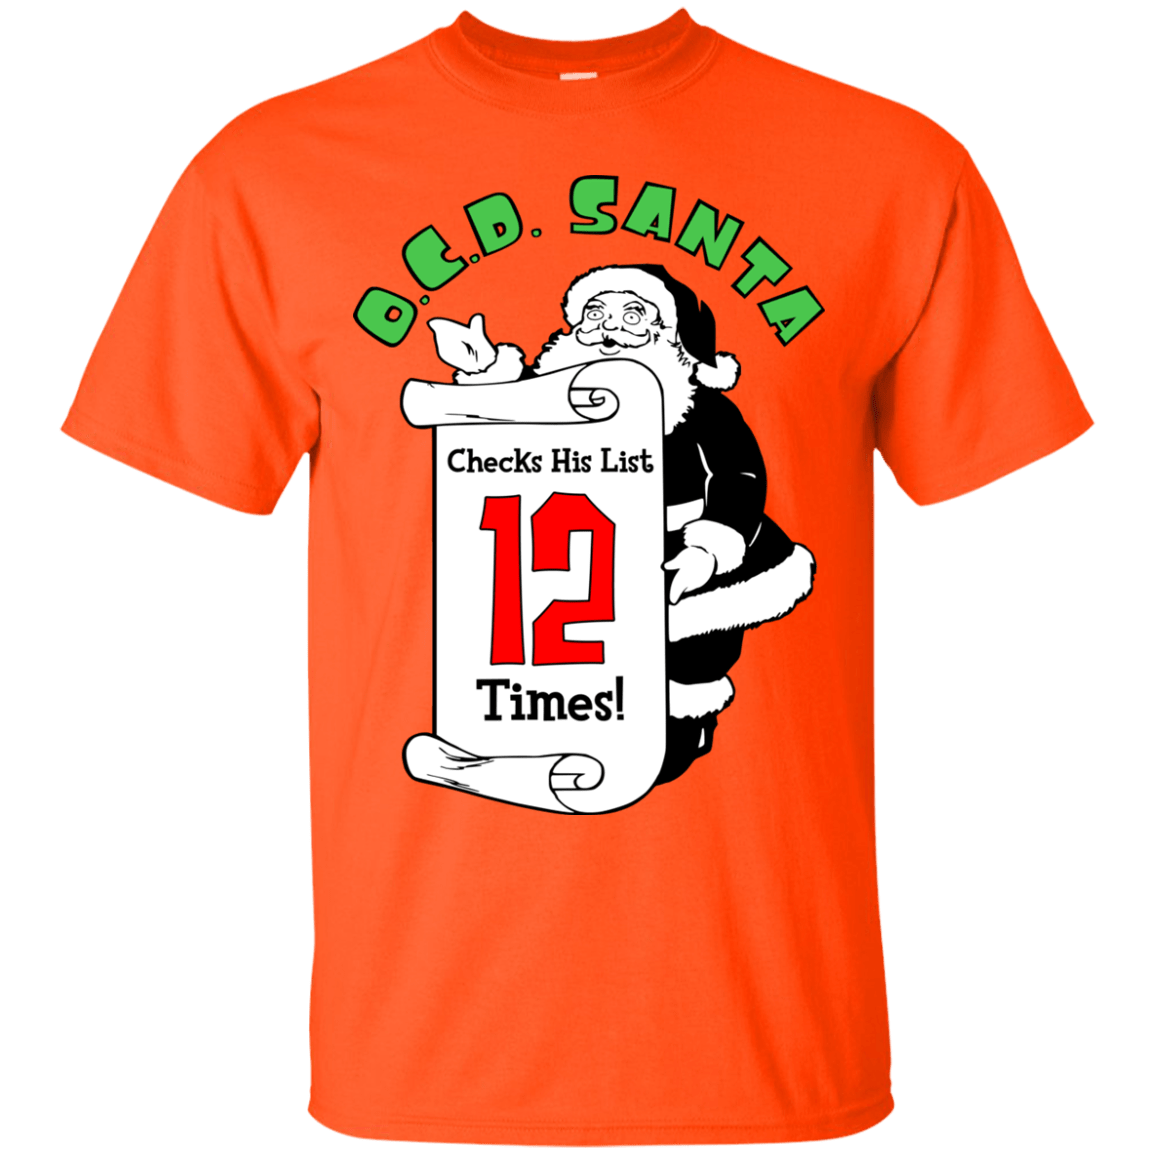 T-Shirts Orange / Small OCD Santa T-Shirt